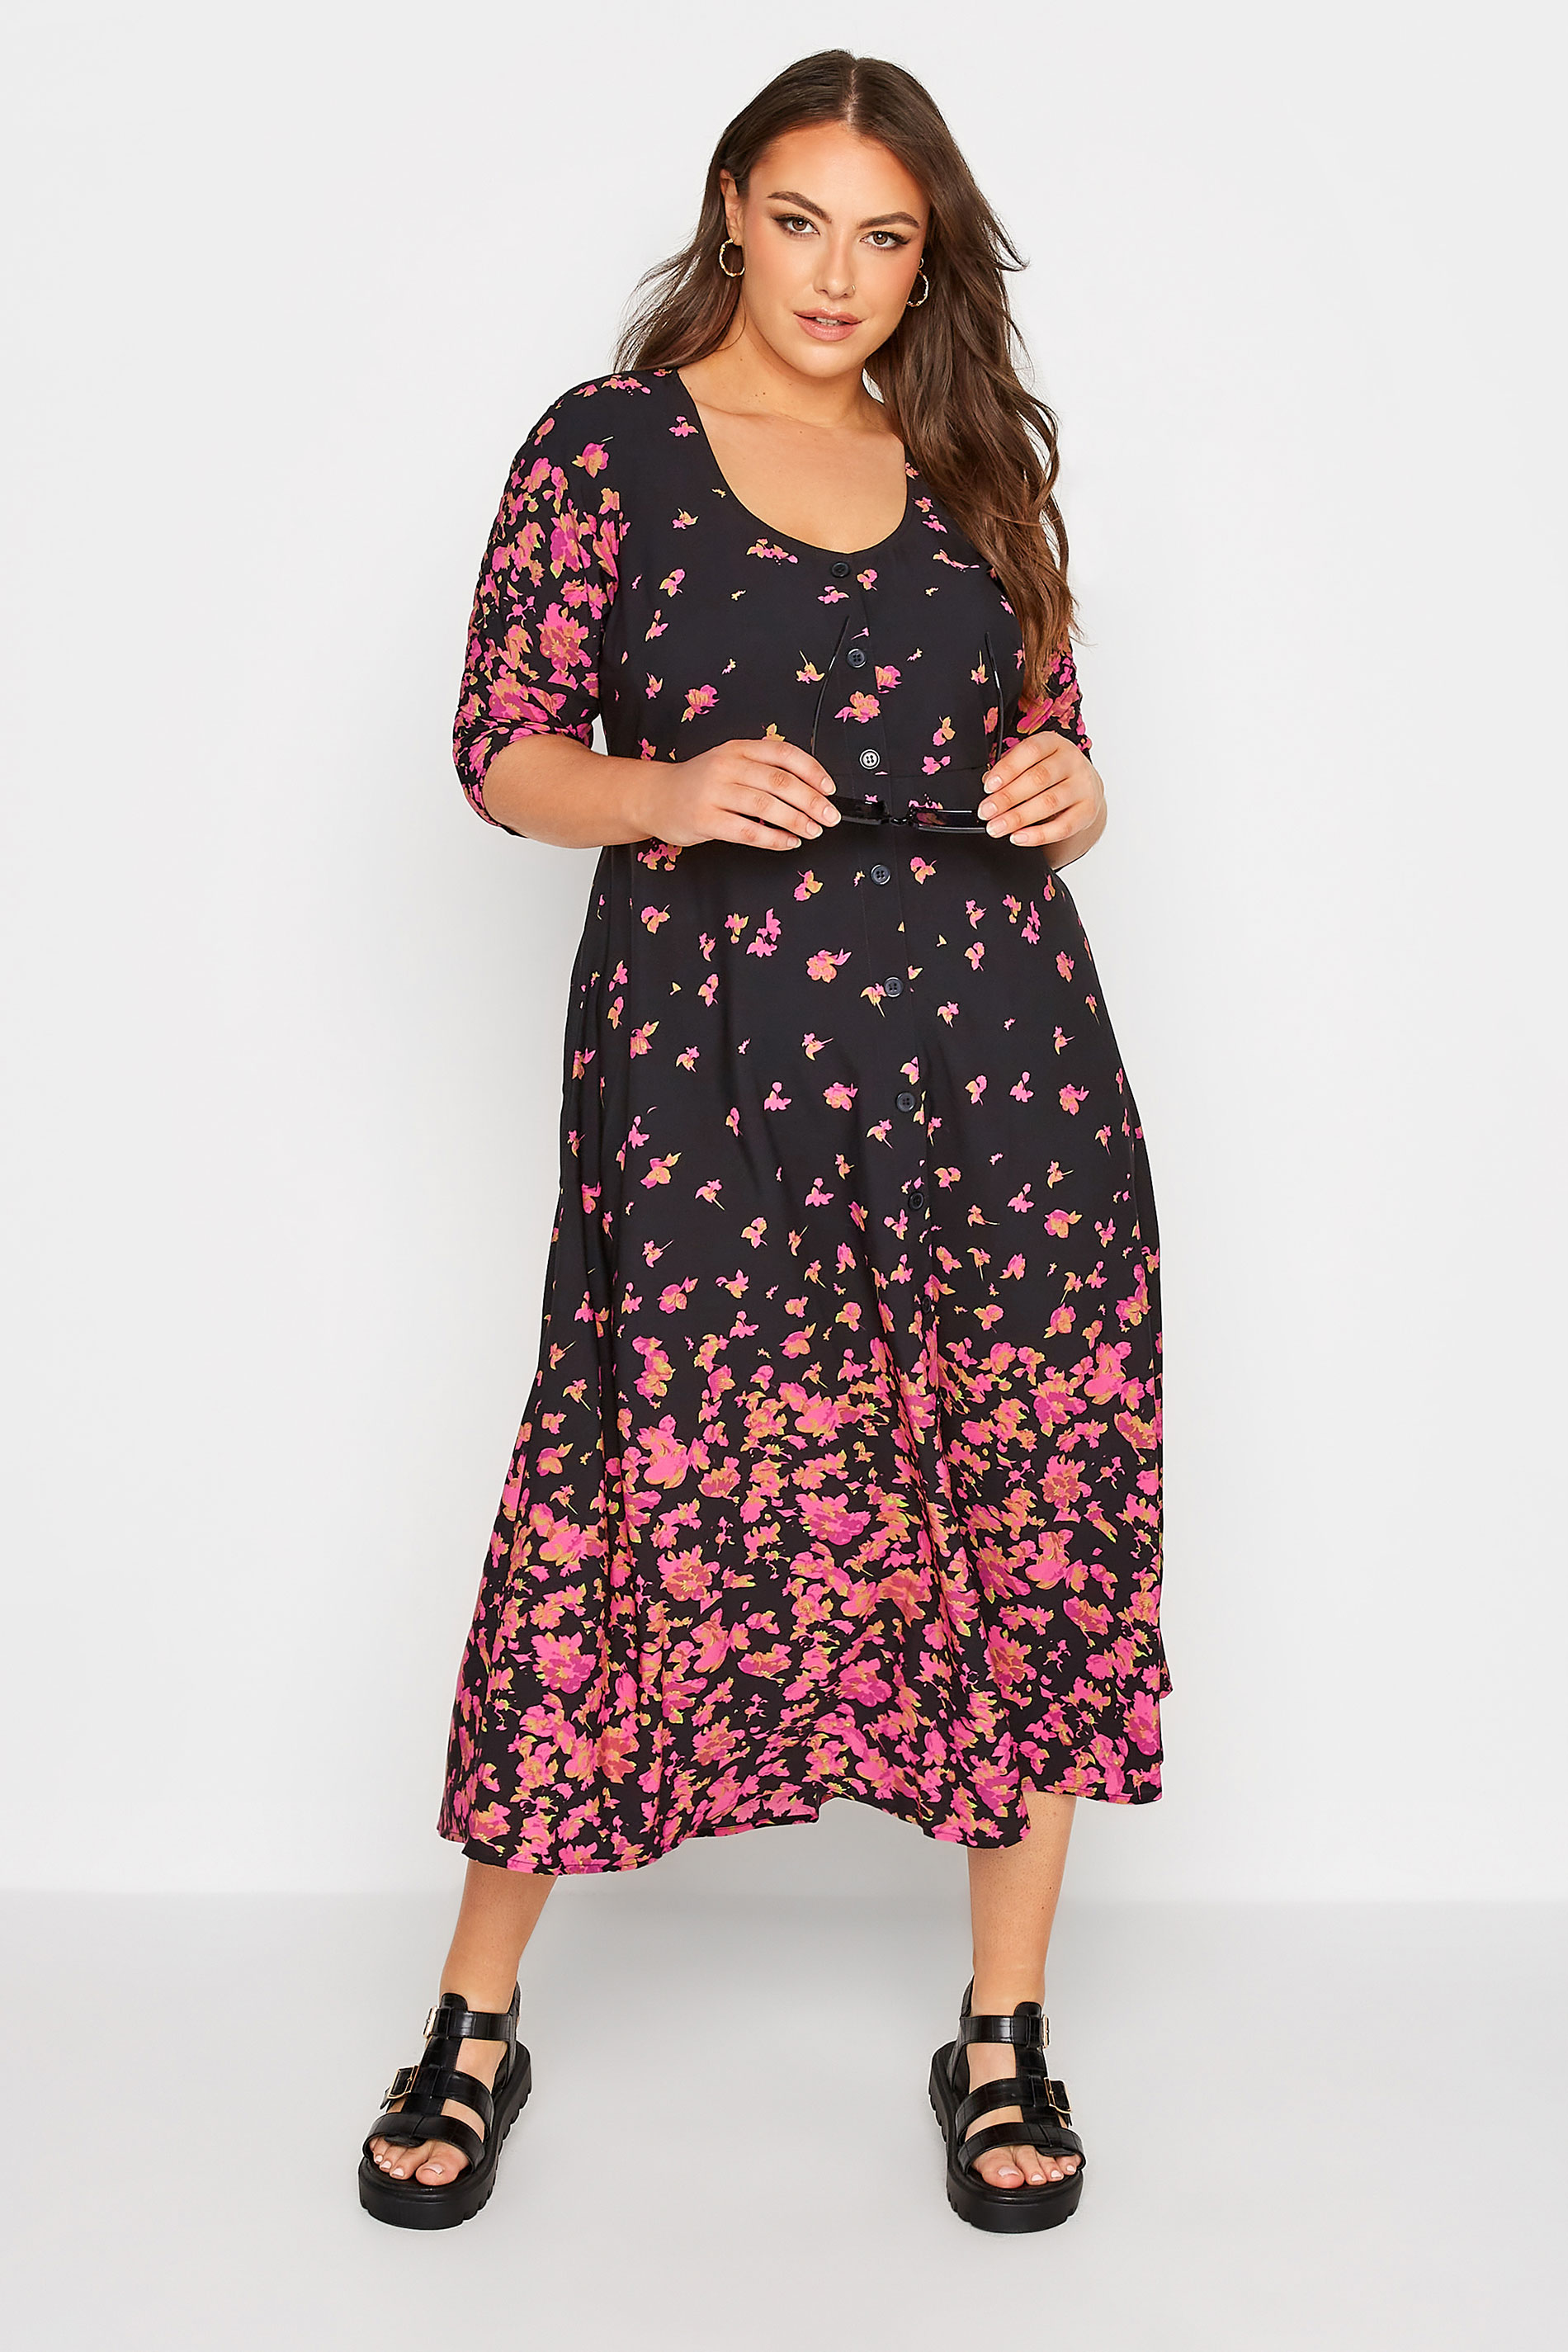 Robes Grande Taille Grande taille  Robes Imprimé Floral | LIMITED COLLECTION - Tea Dress Noire Bordures Floral Rose - TC46029